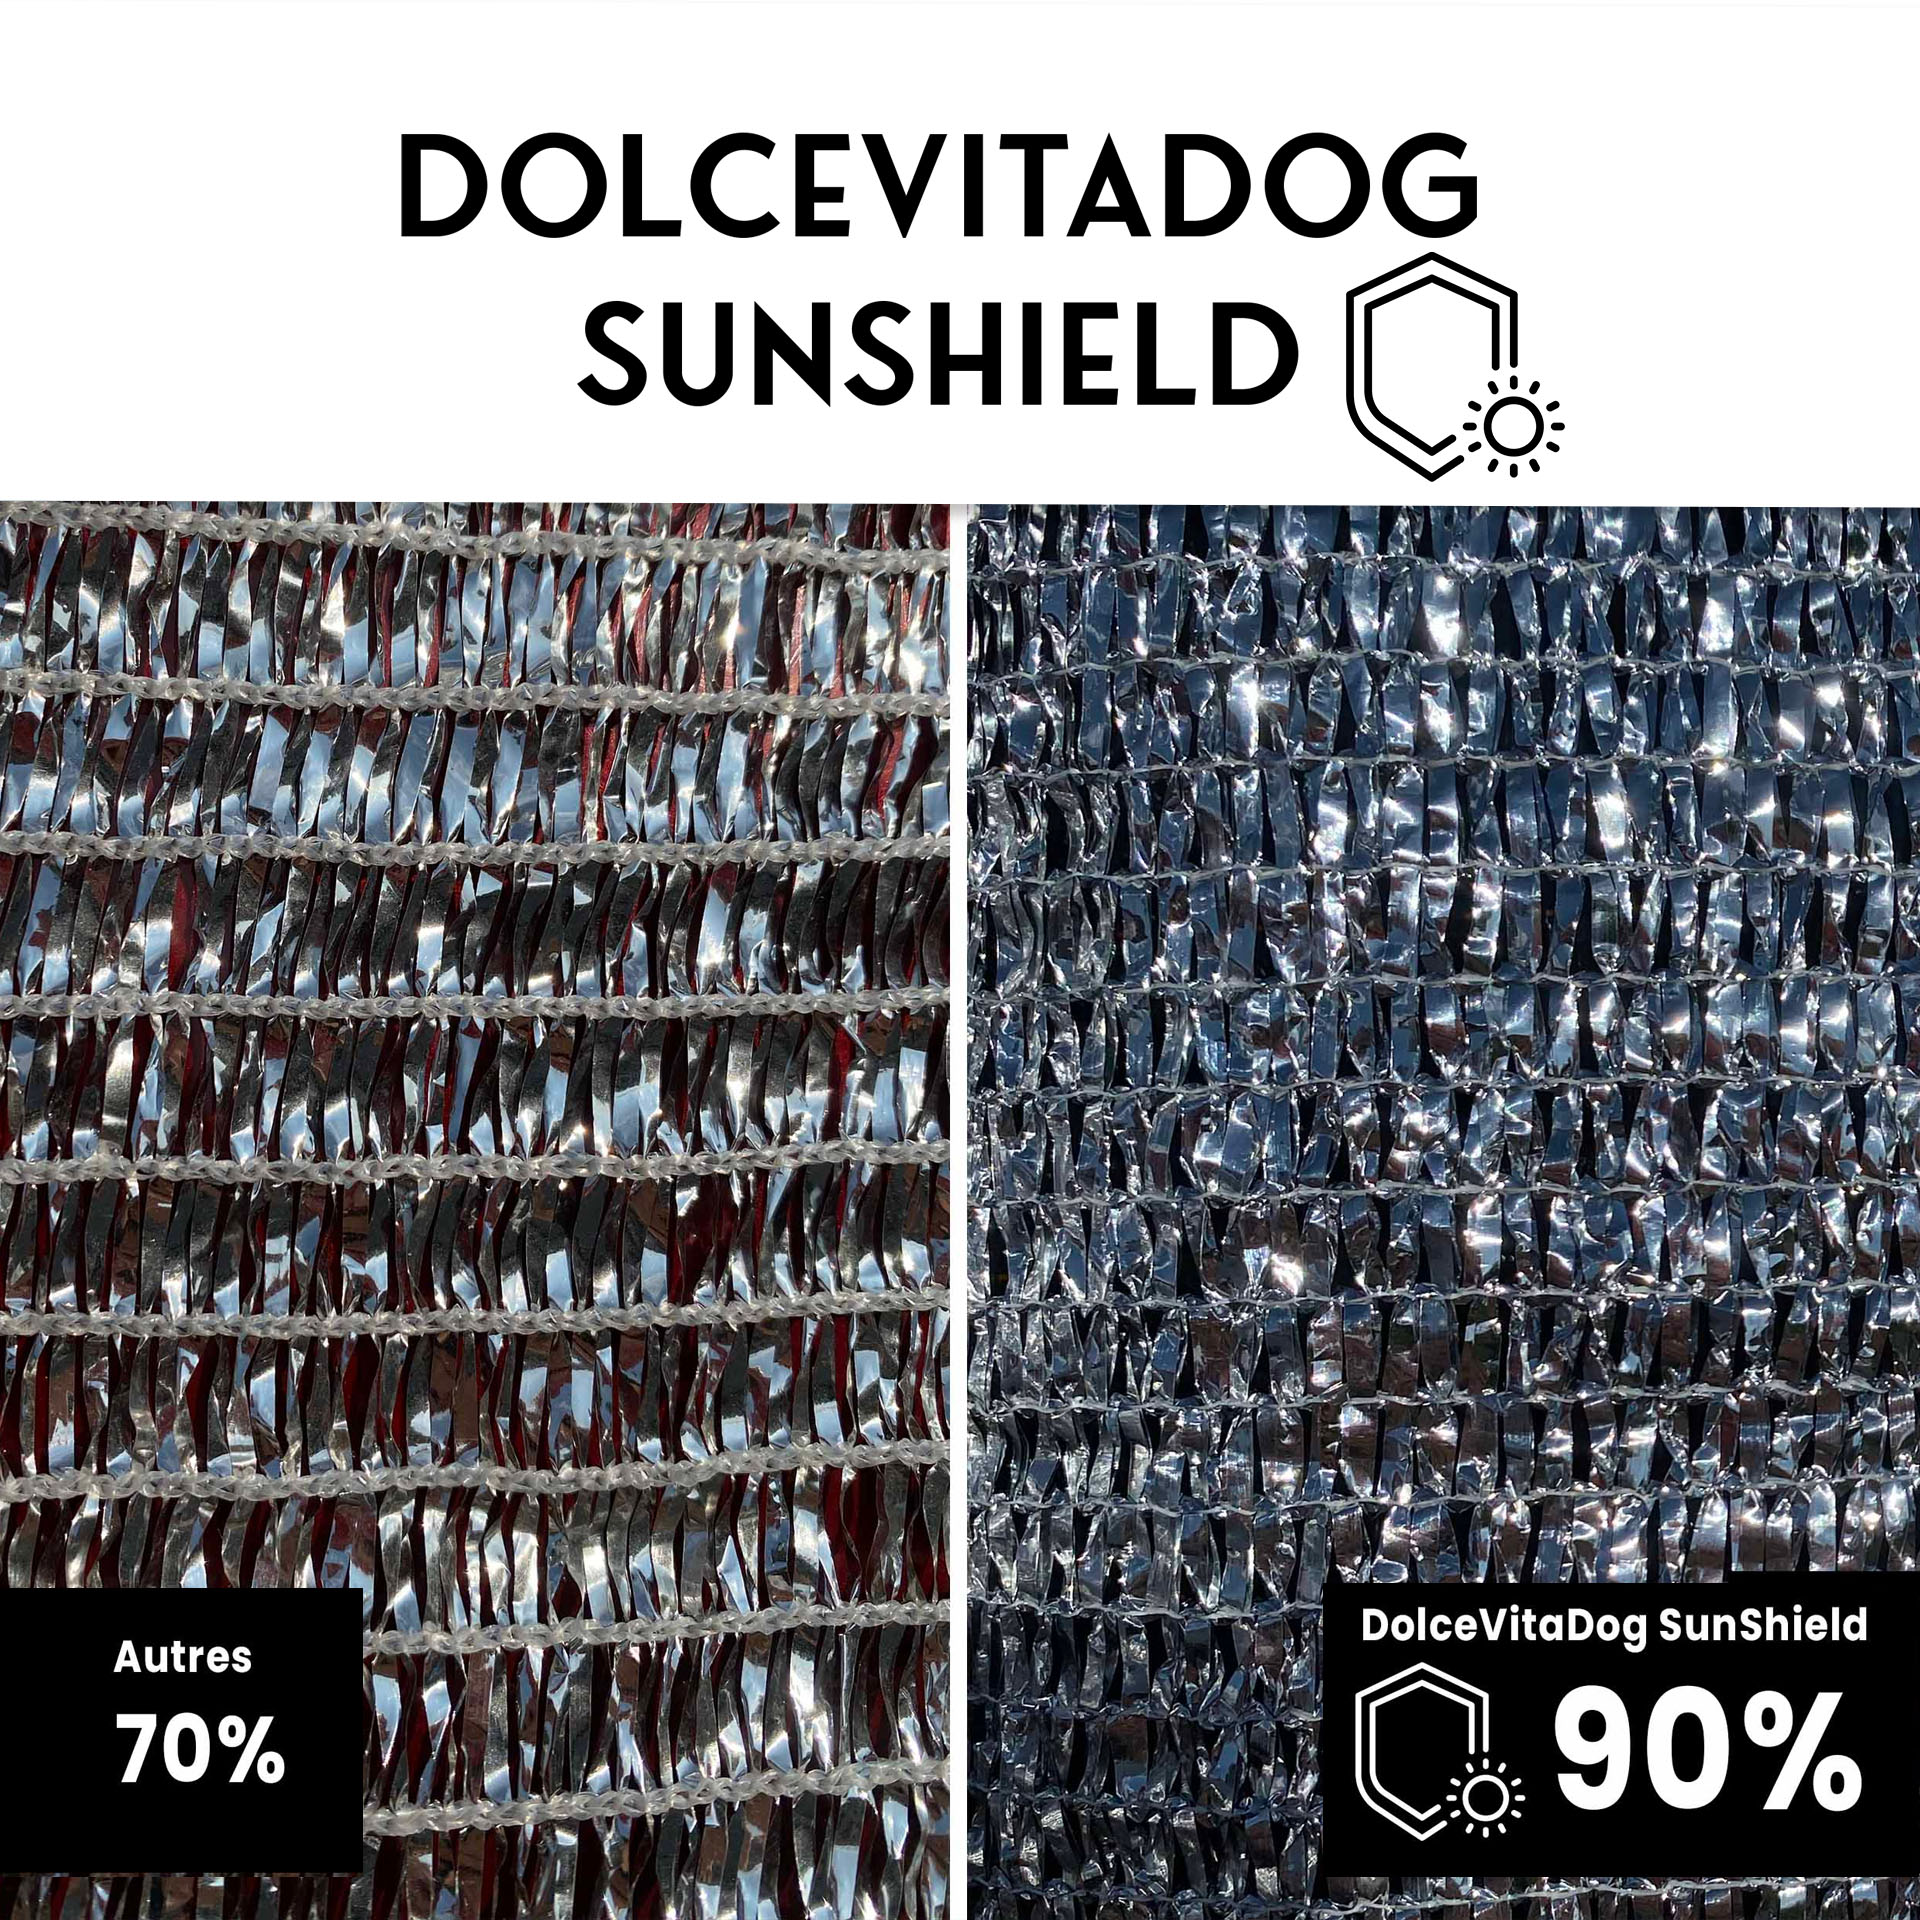 DolceVitaDog Sunshield Comparision